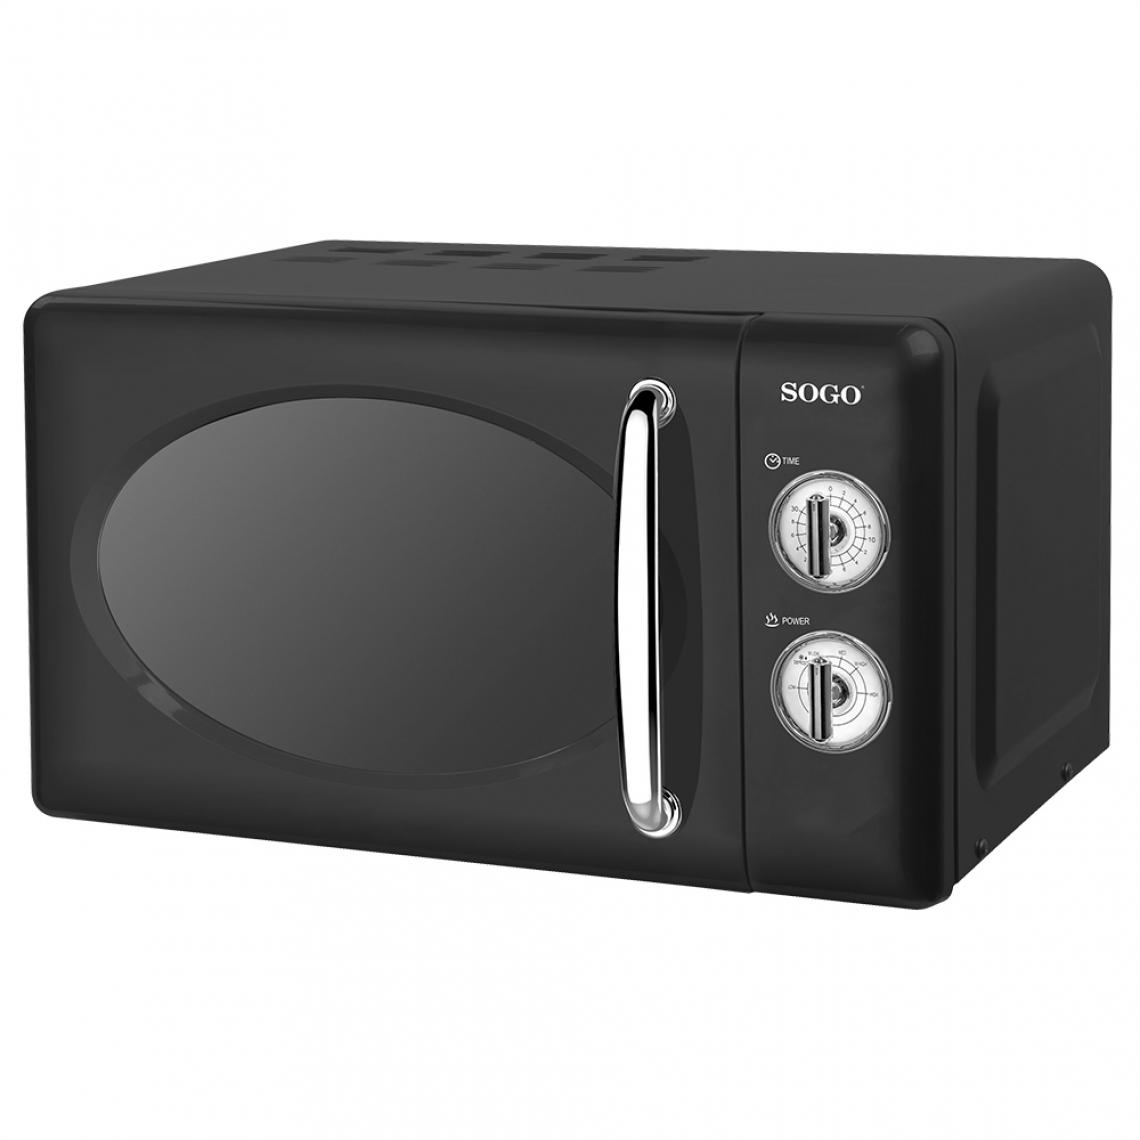 Sogo - Micro-ondes sans grill - 20L - 700W - SOGO HOR-SS-890 - Noir - Four micro-ondes